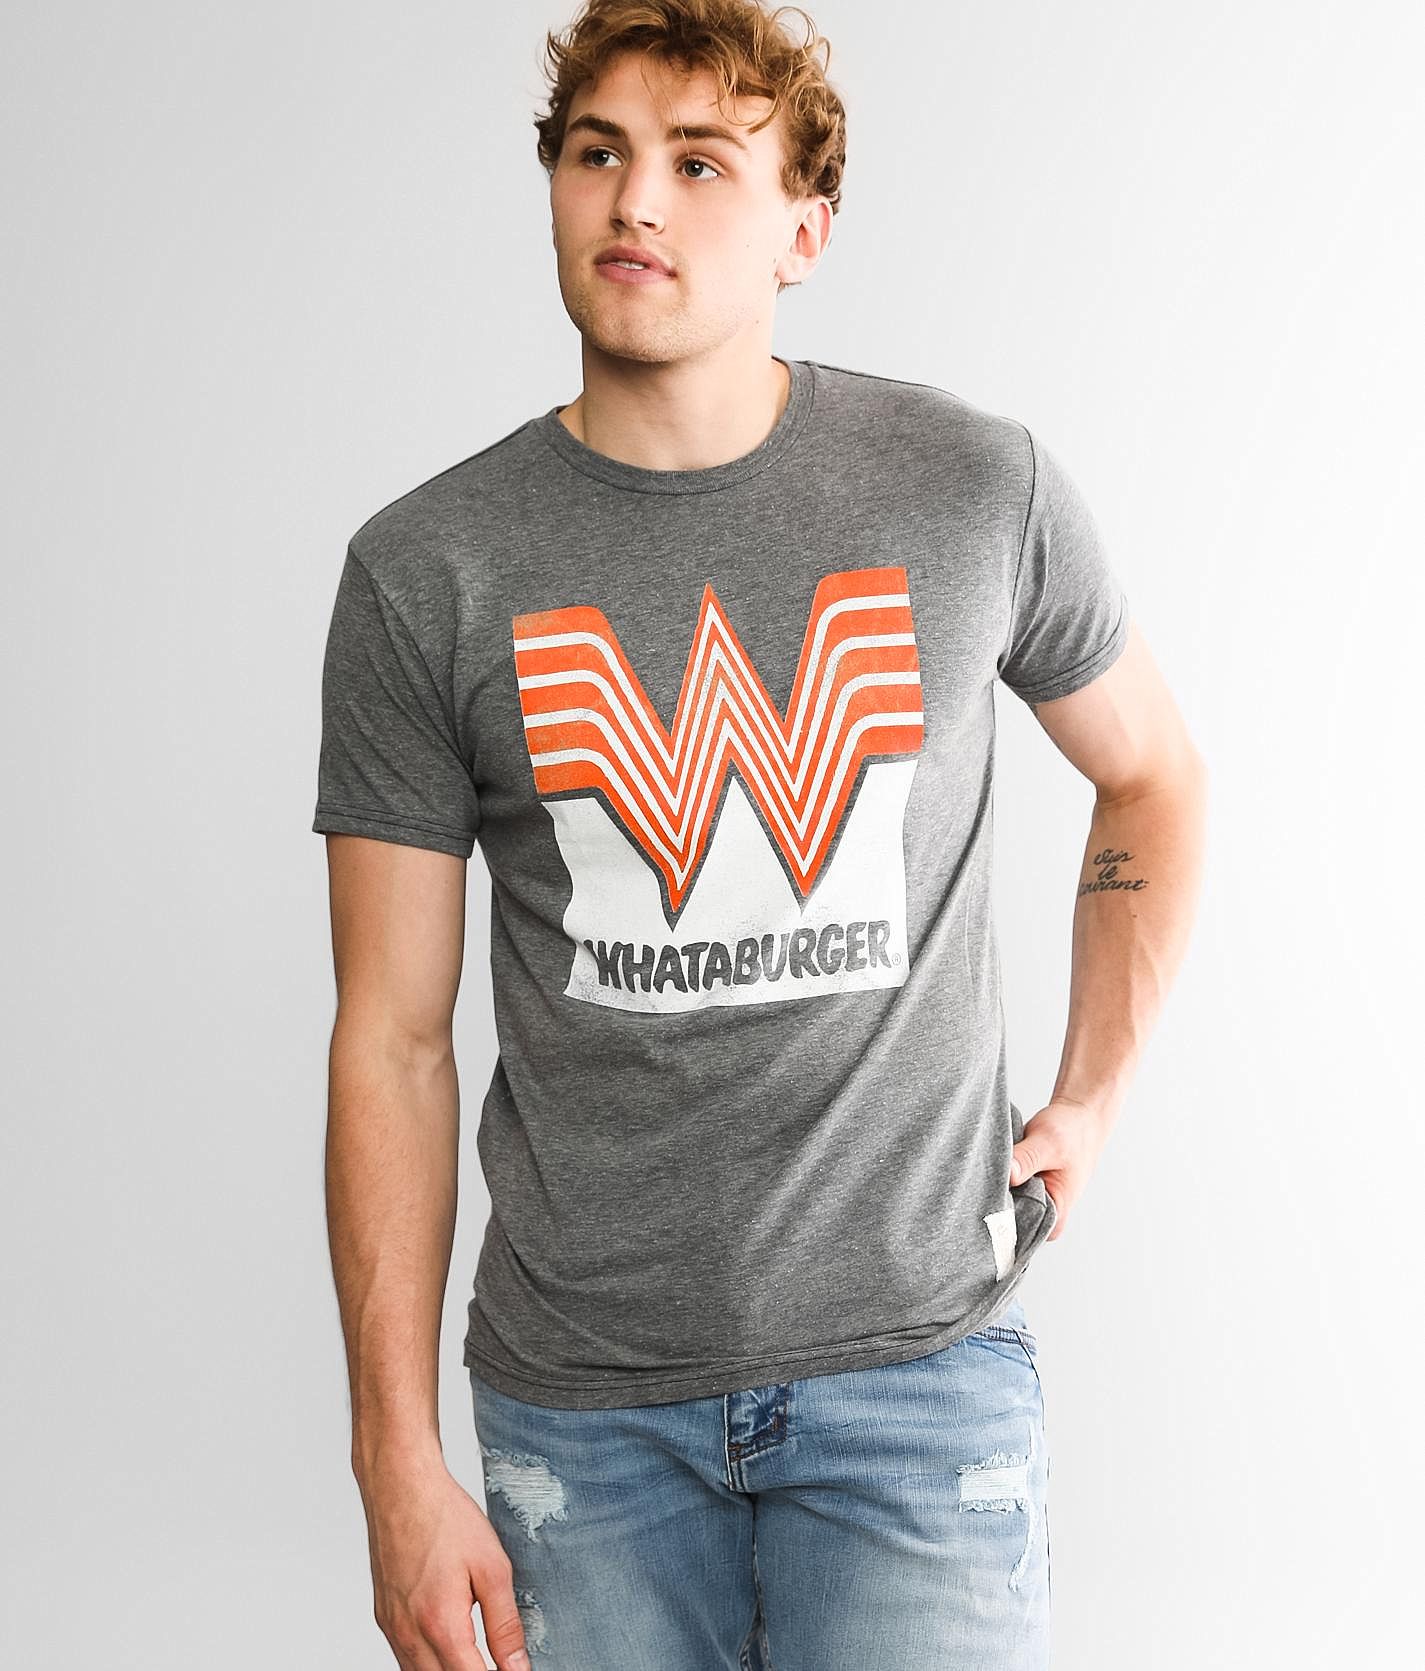 Whataburger, Shirts